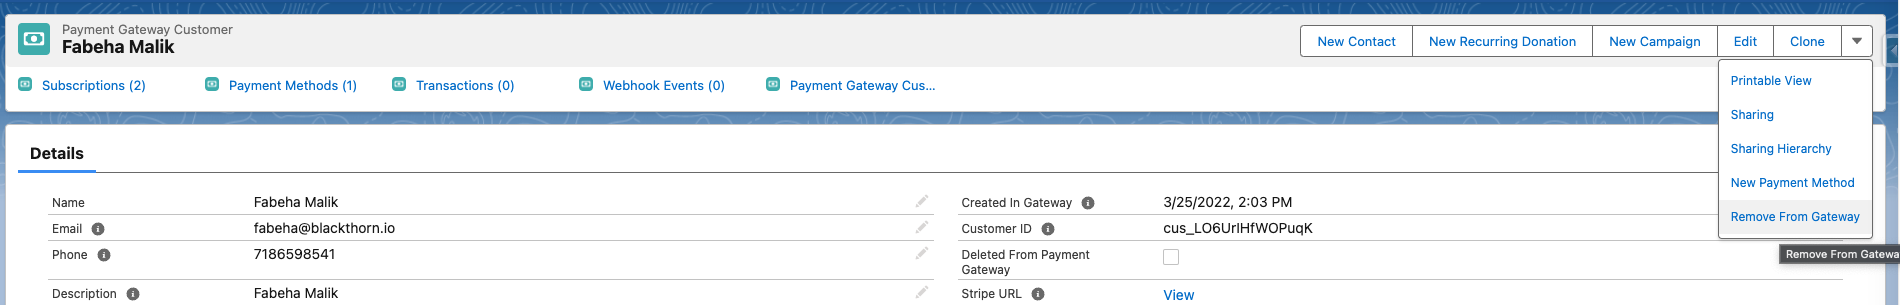 Delete a Payment Gateway 2